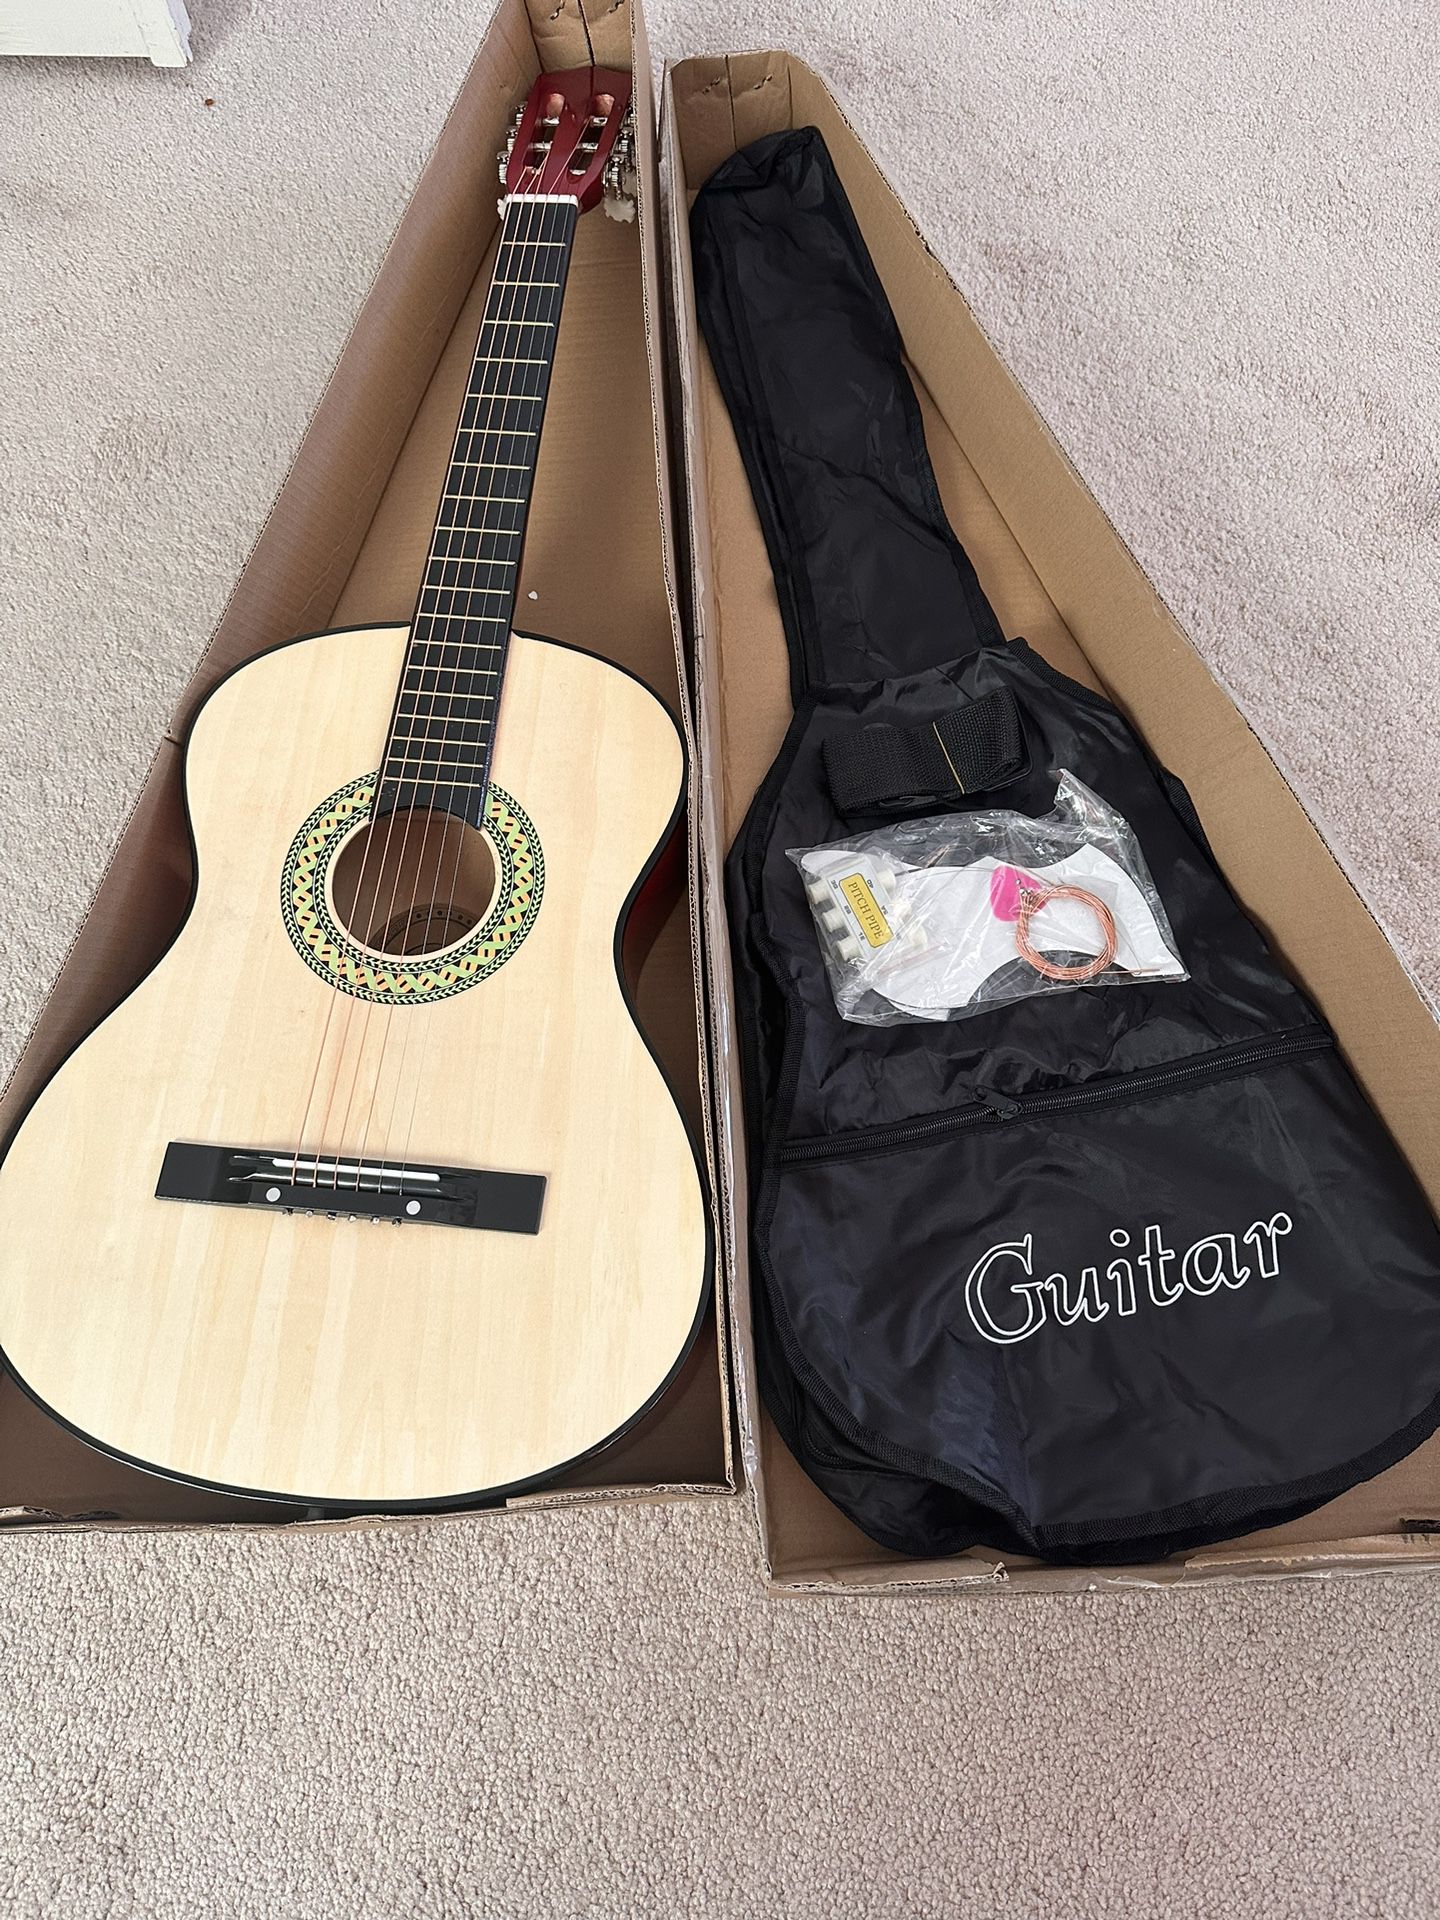 Acoustic Guitar Set - $90 OBO